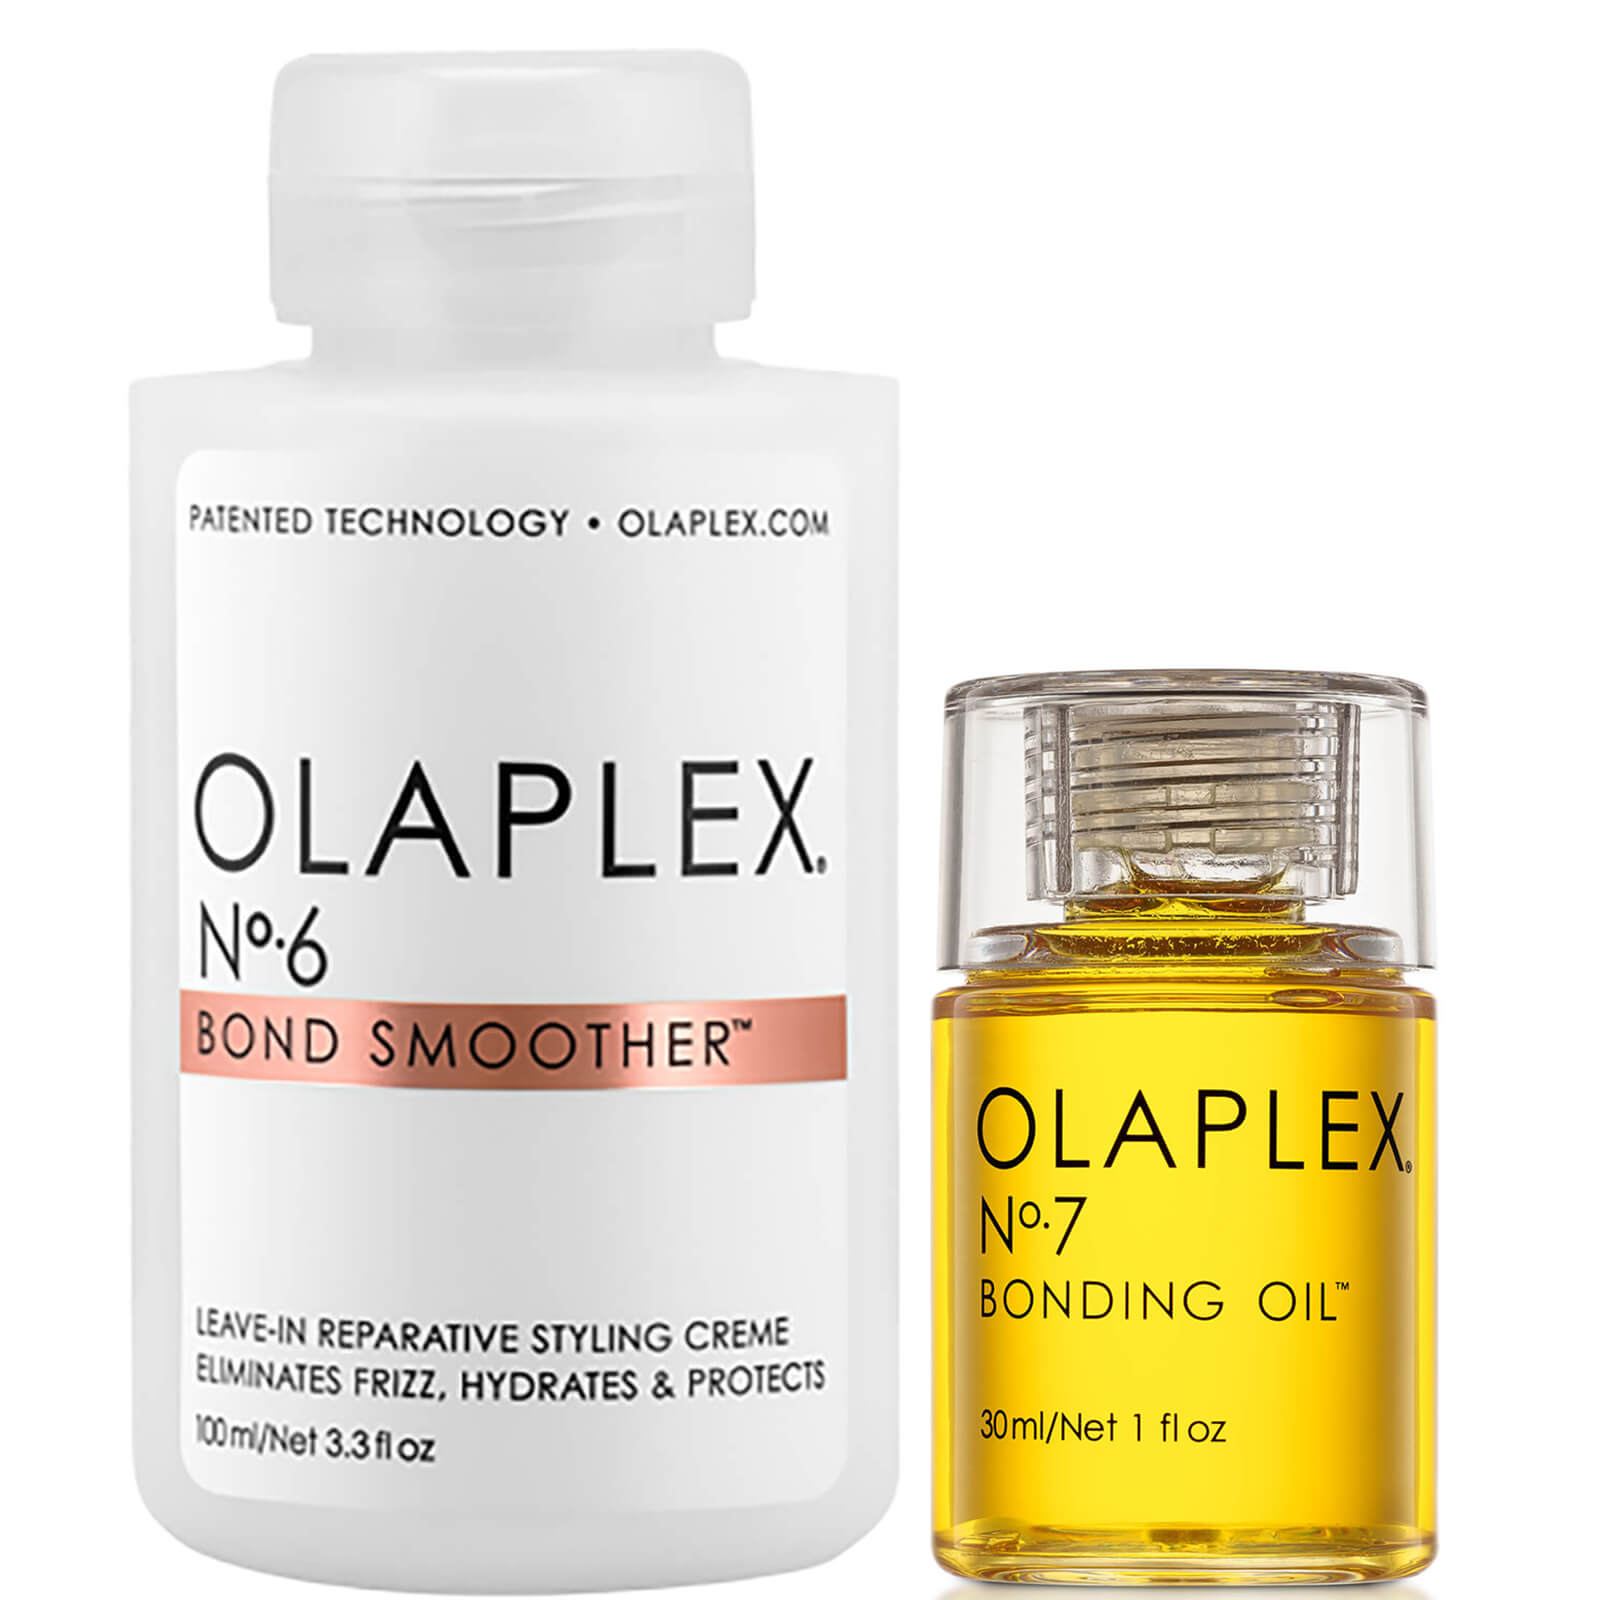 Olaplex No.7 Bonding Oil and No.6 Bond Smoother | SRF & Beauty